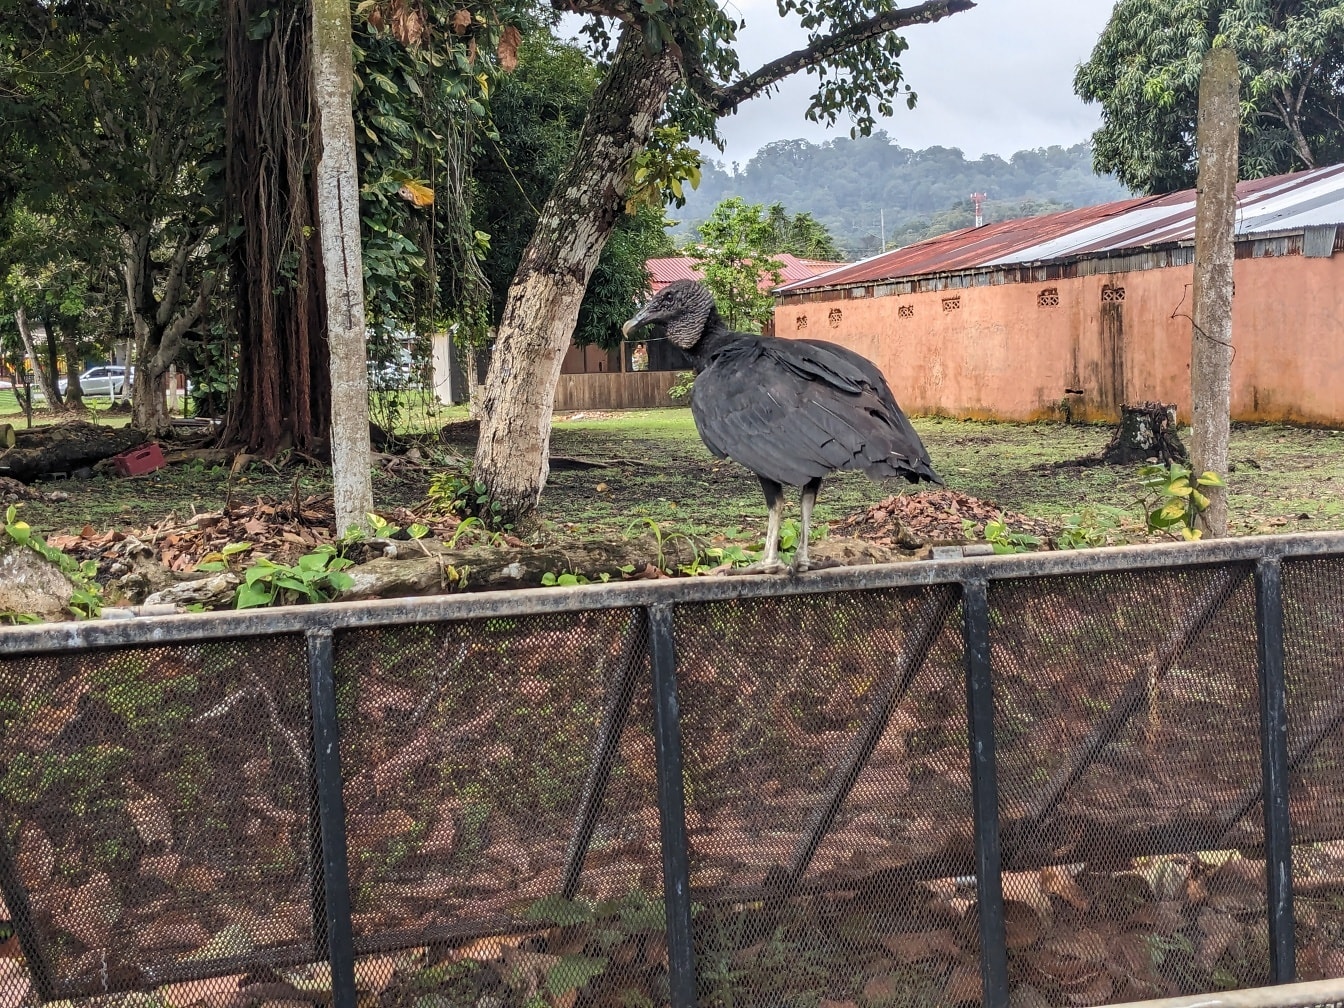 American black vulture (Coragyps atratus) bird standing on a fence